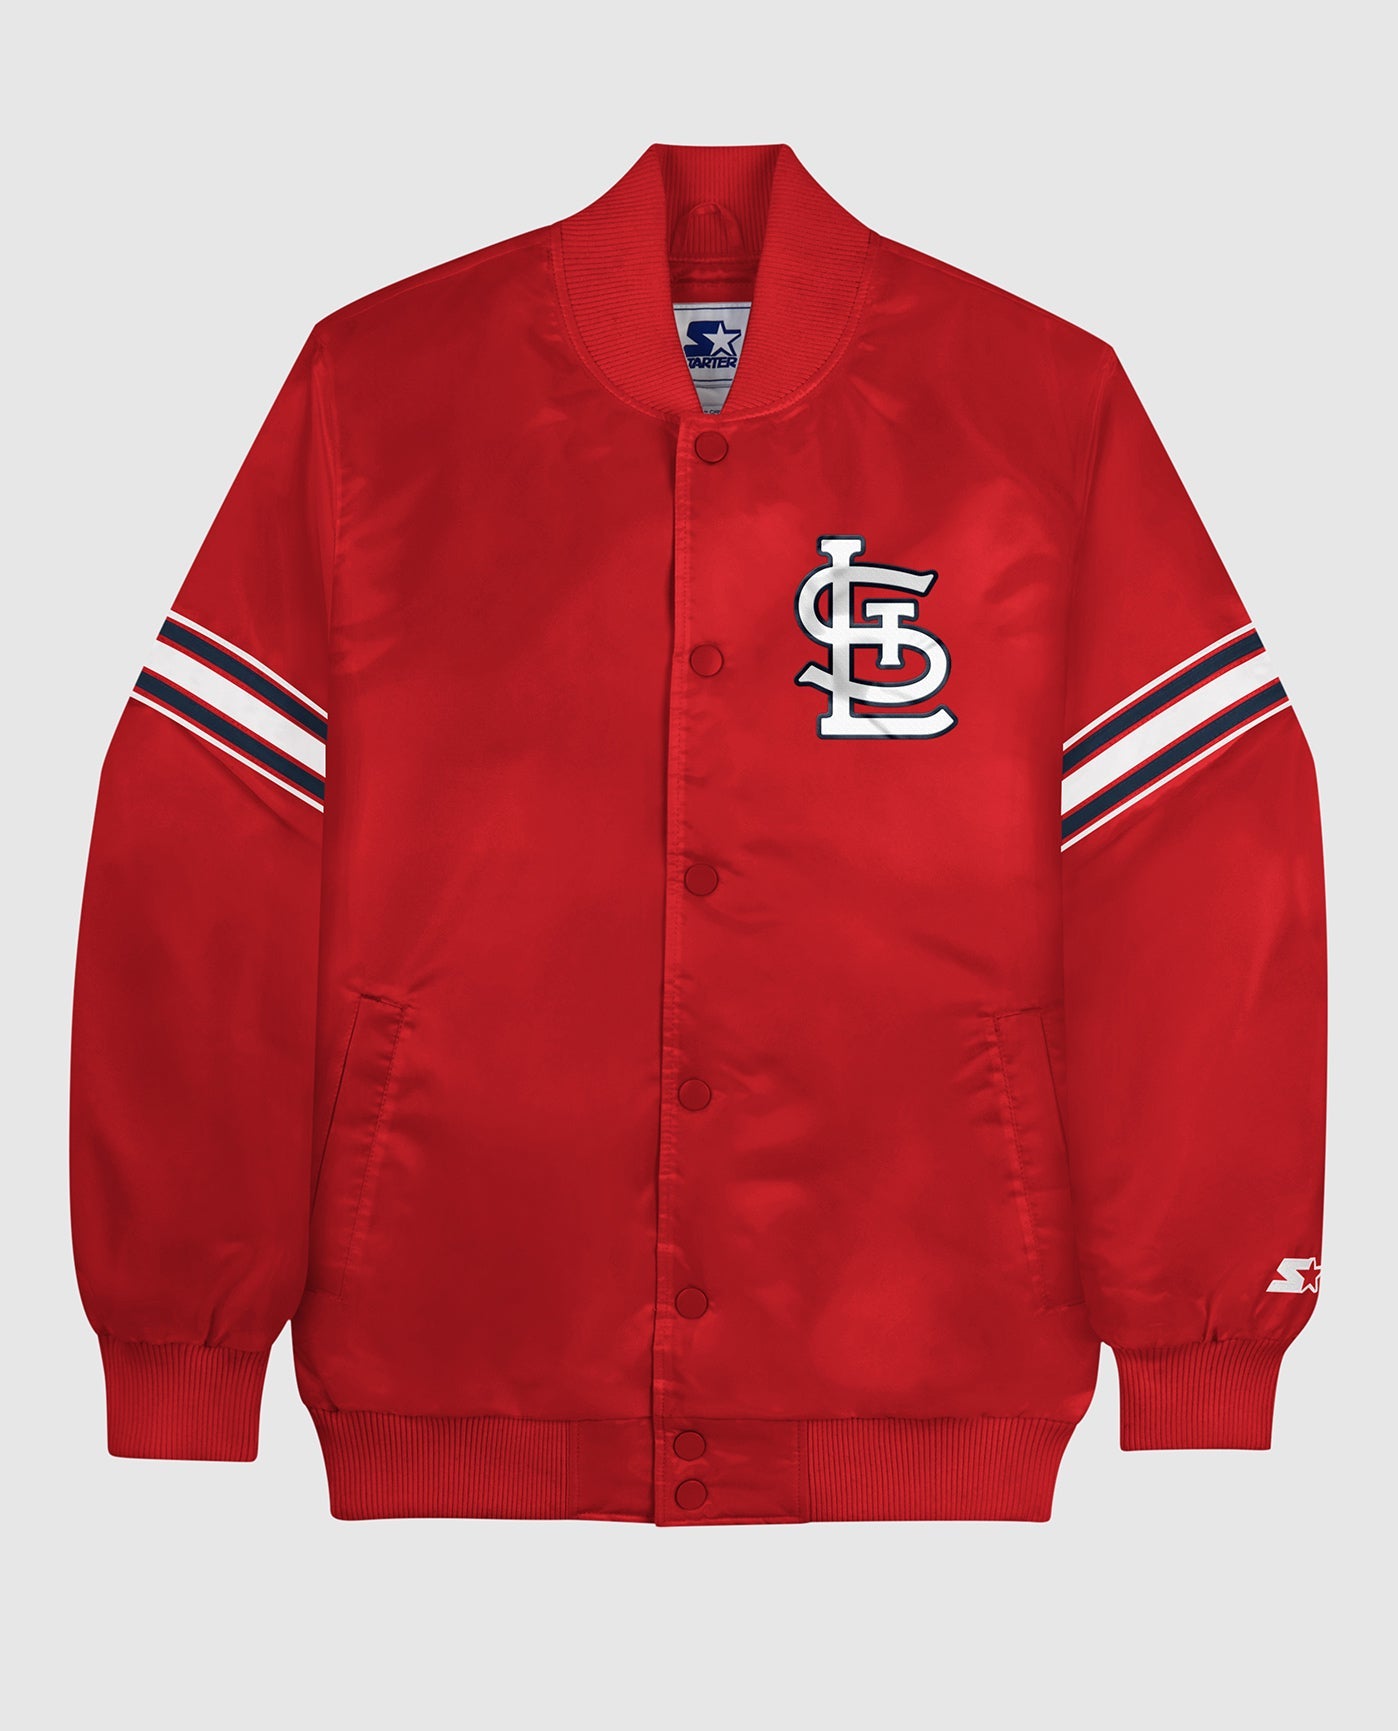 st louis cardinals jackets for men